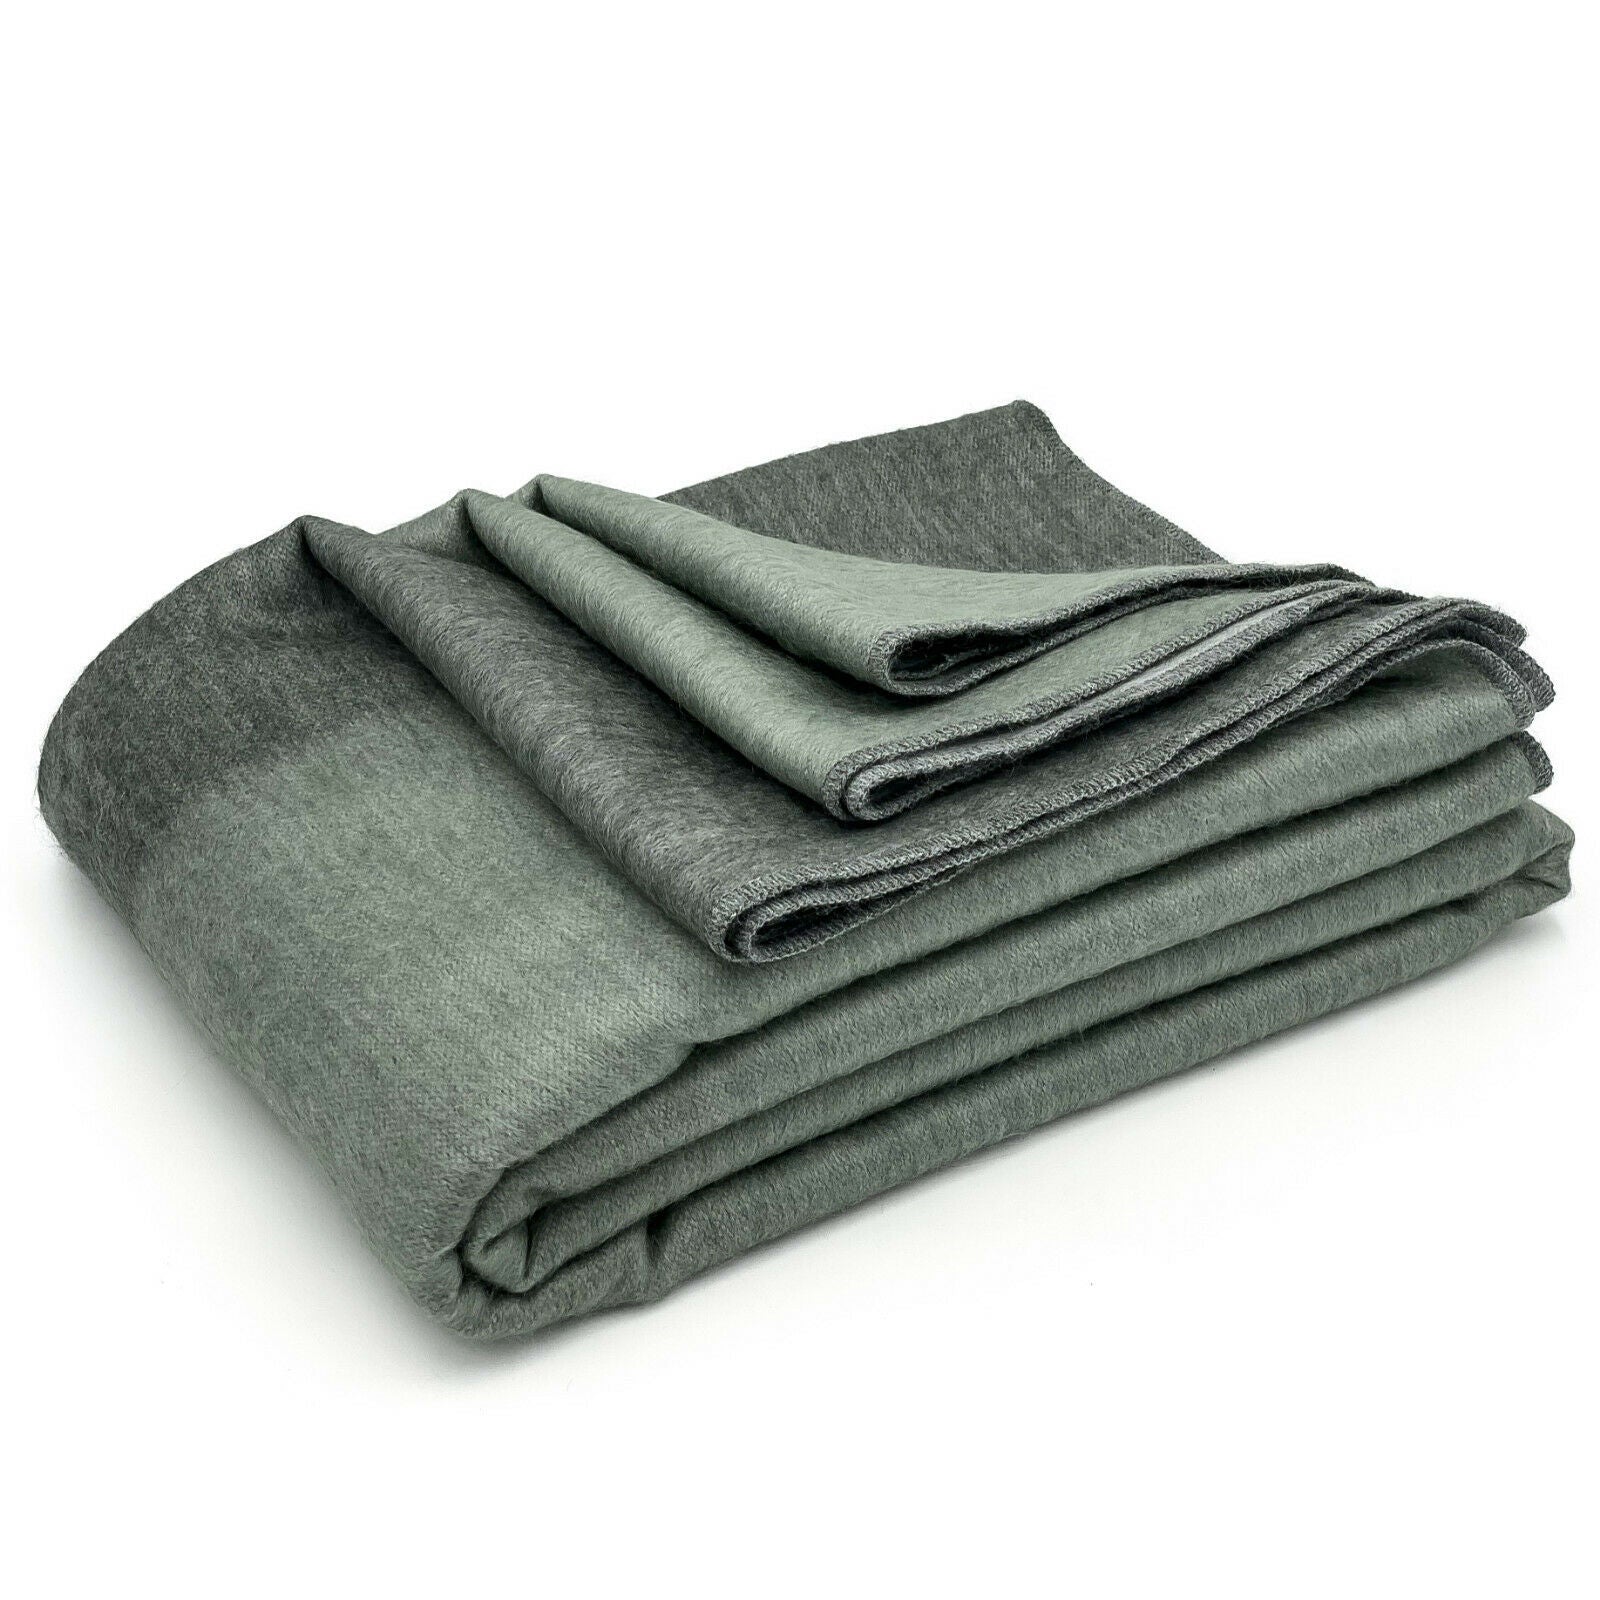 Soft & Warm Baby Alpaca Wool Throw Blanket / Sofa Cover - Queen 96" x 64" - shades of grey pattern